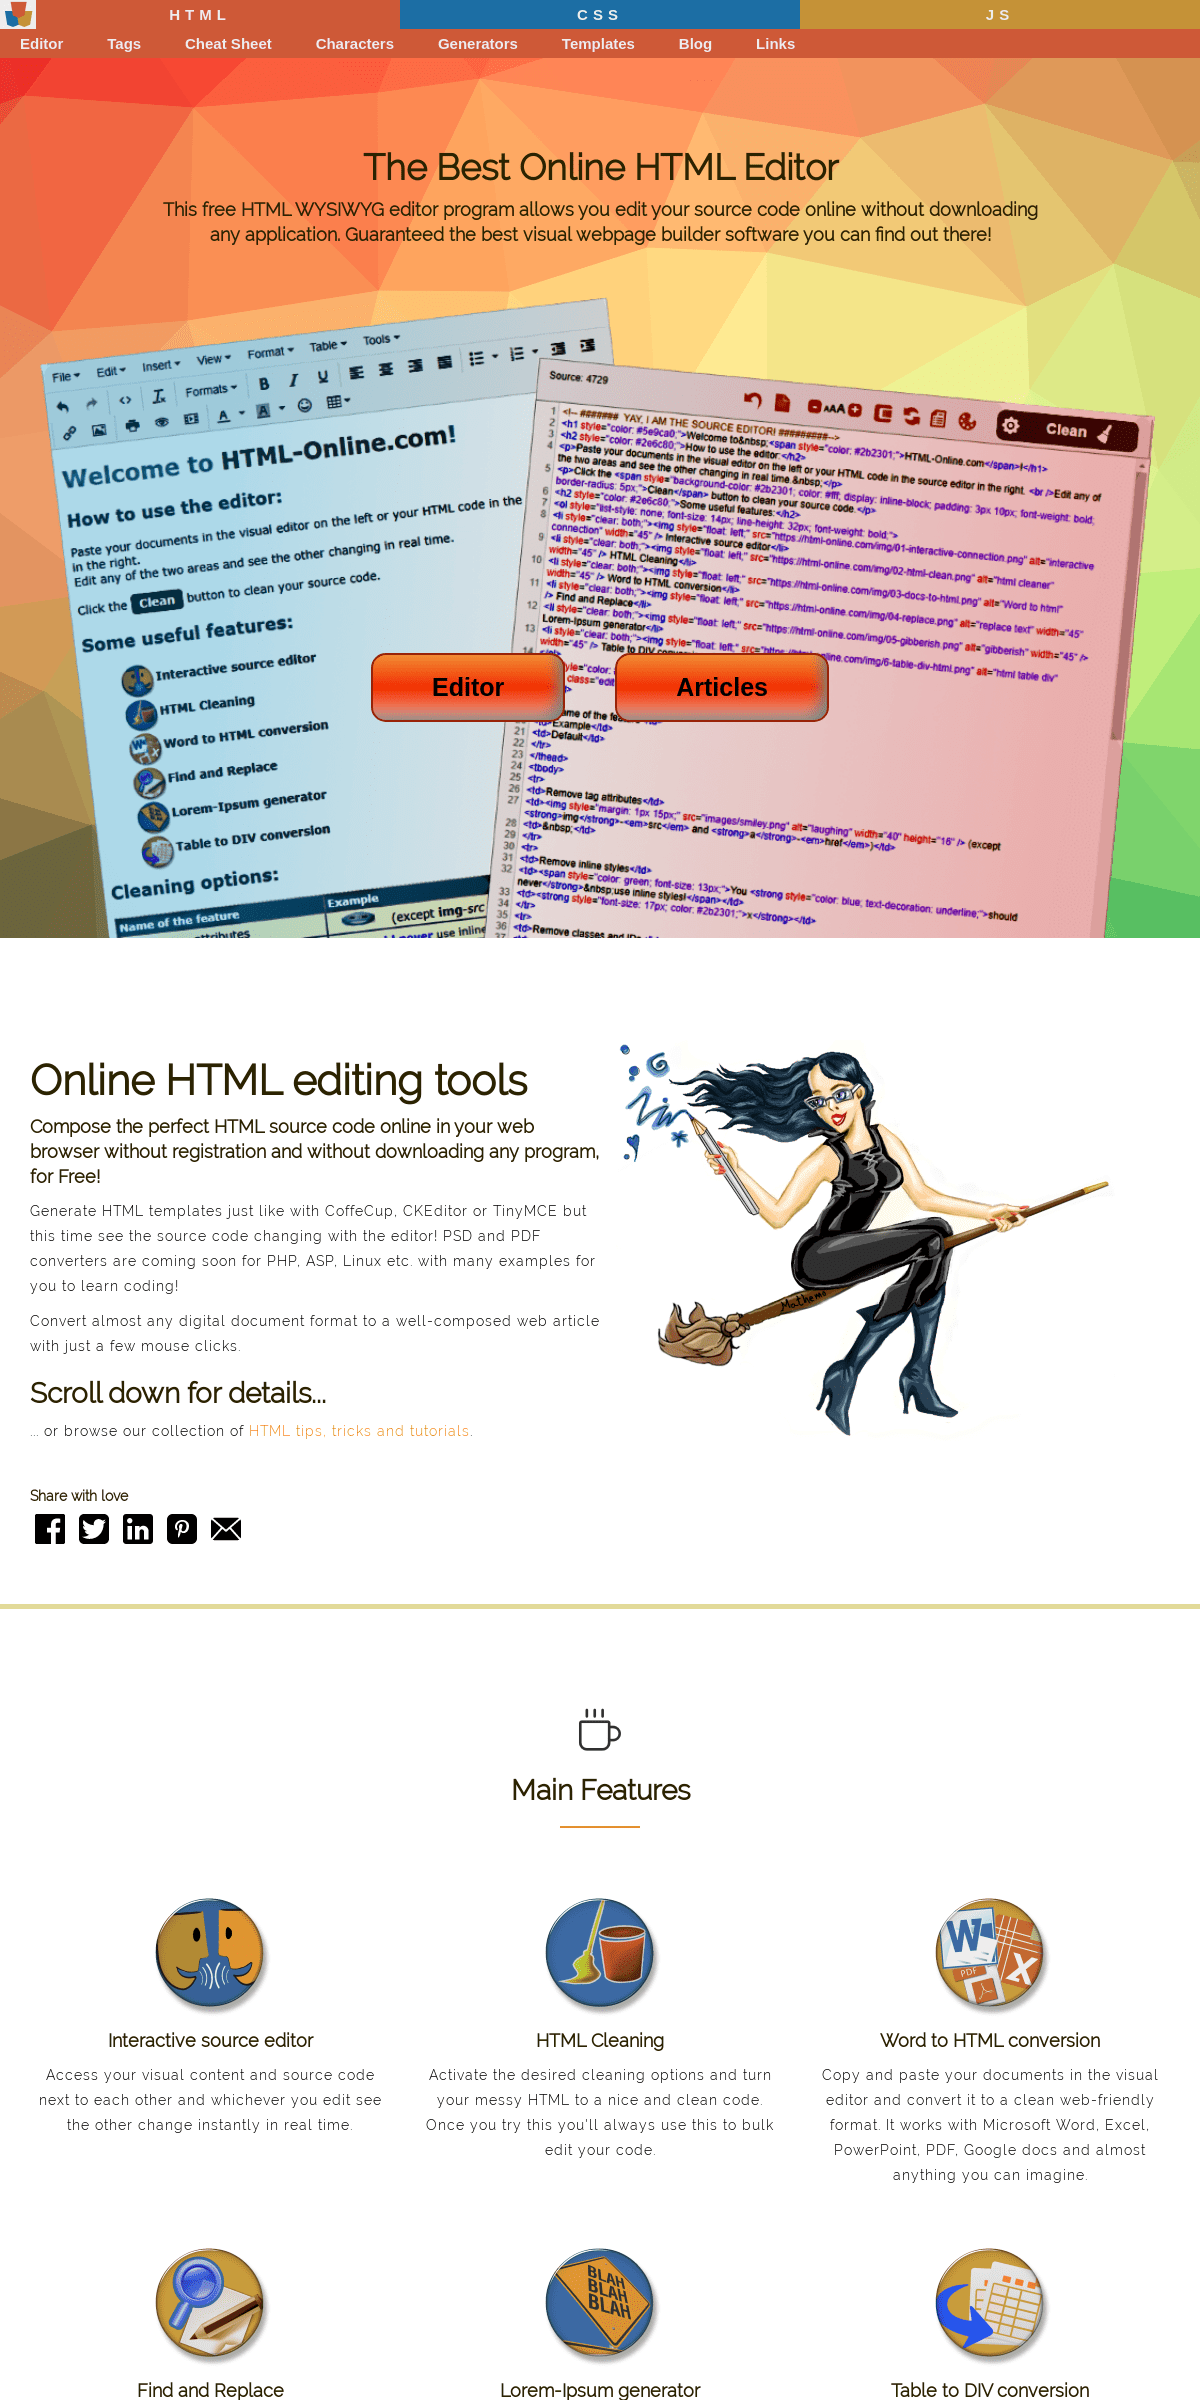 A complete backup of html-online.com